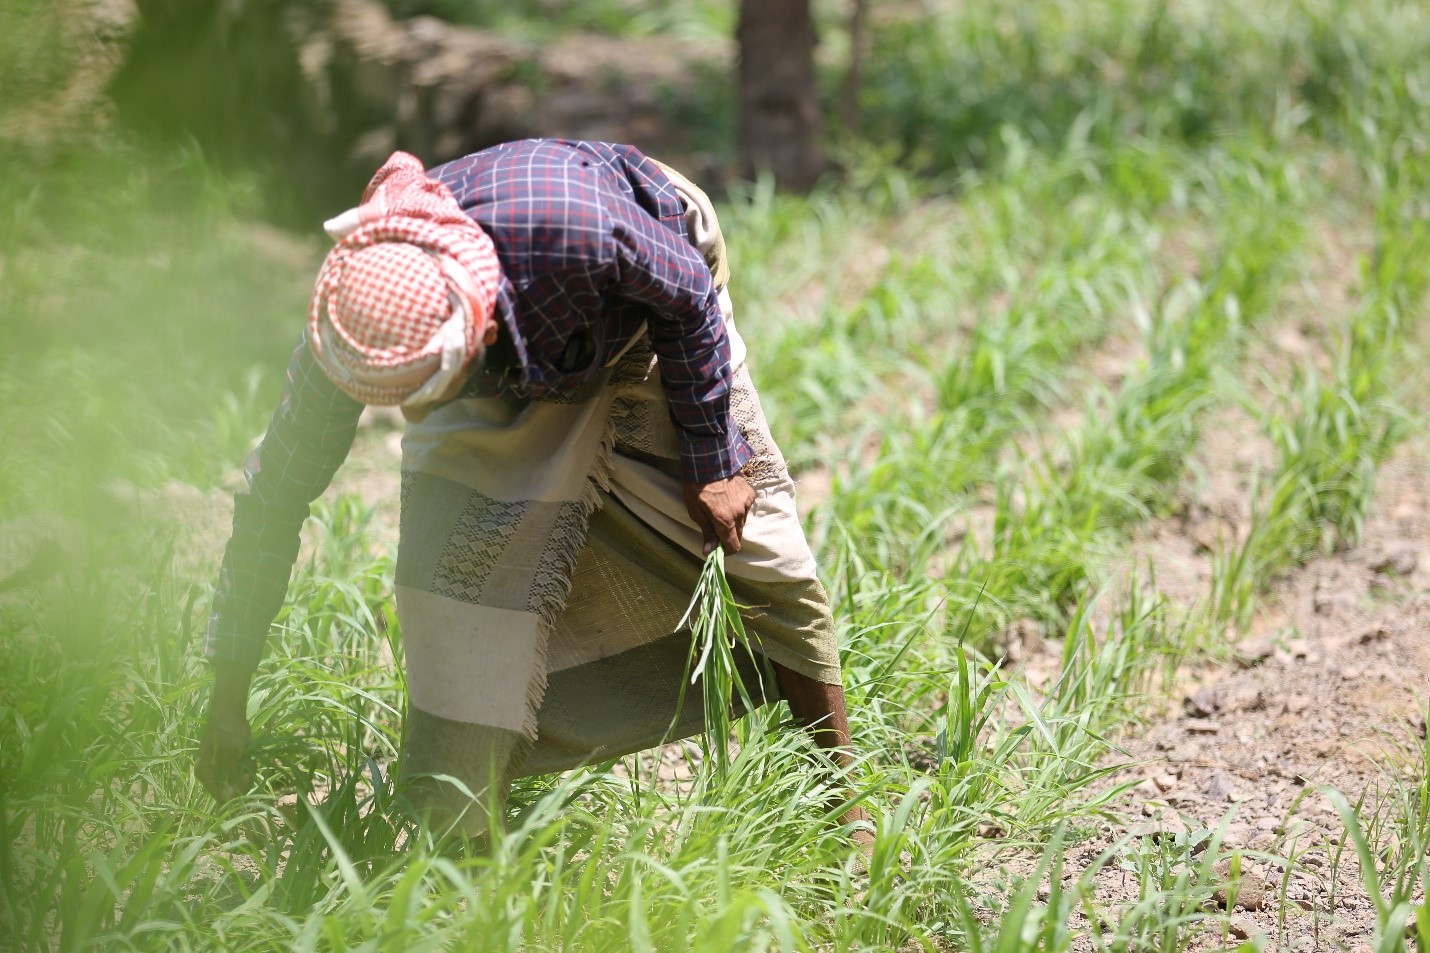 A man working in a field